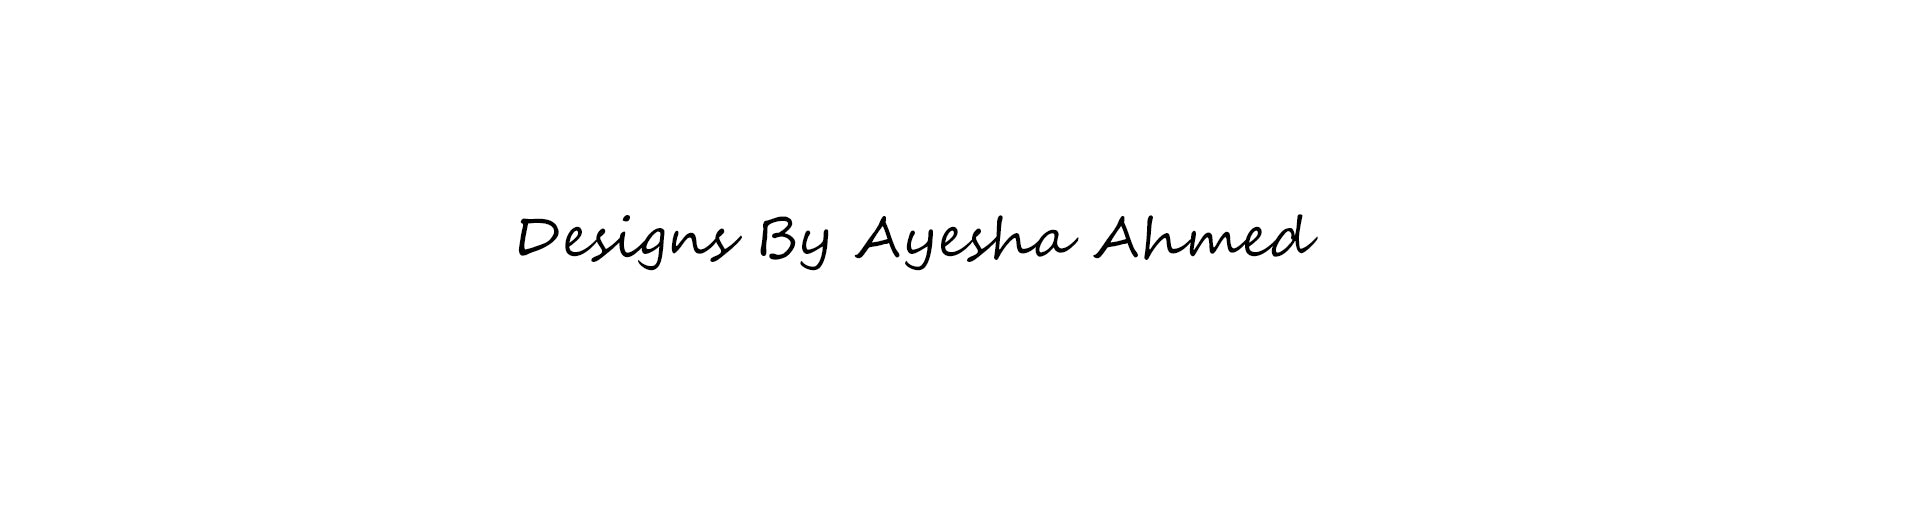 Ayesha Ahmed